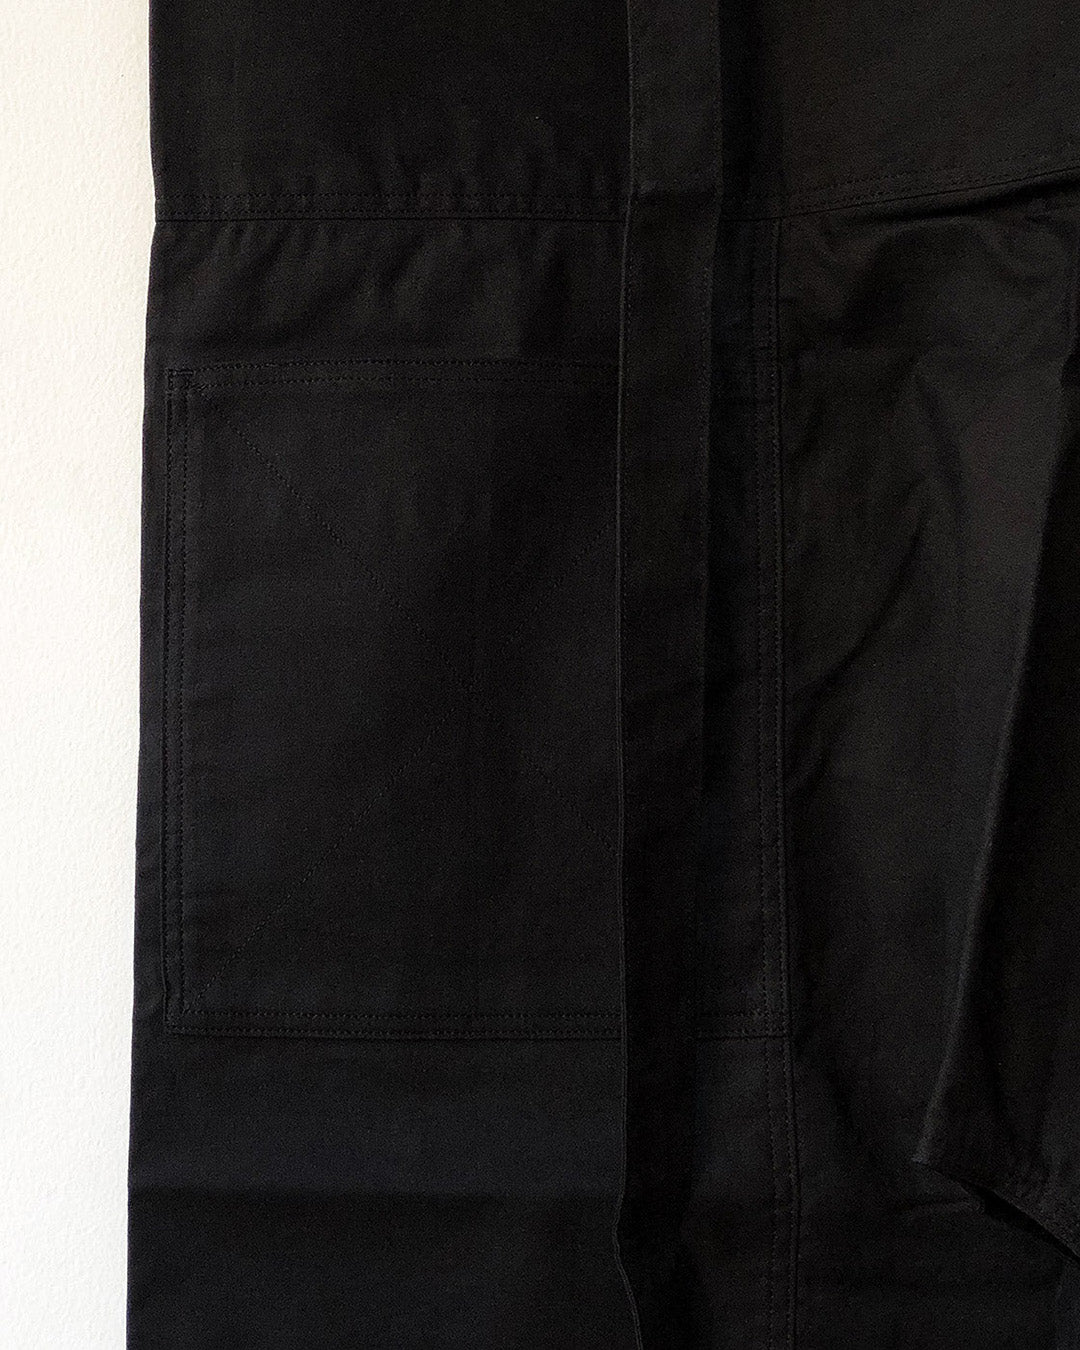 TUKI fisherman's shorts / black / size0